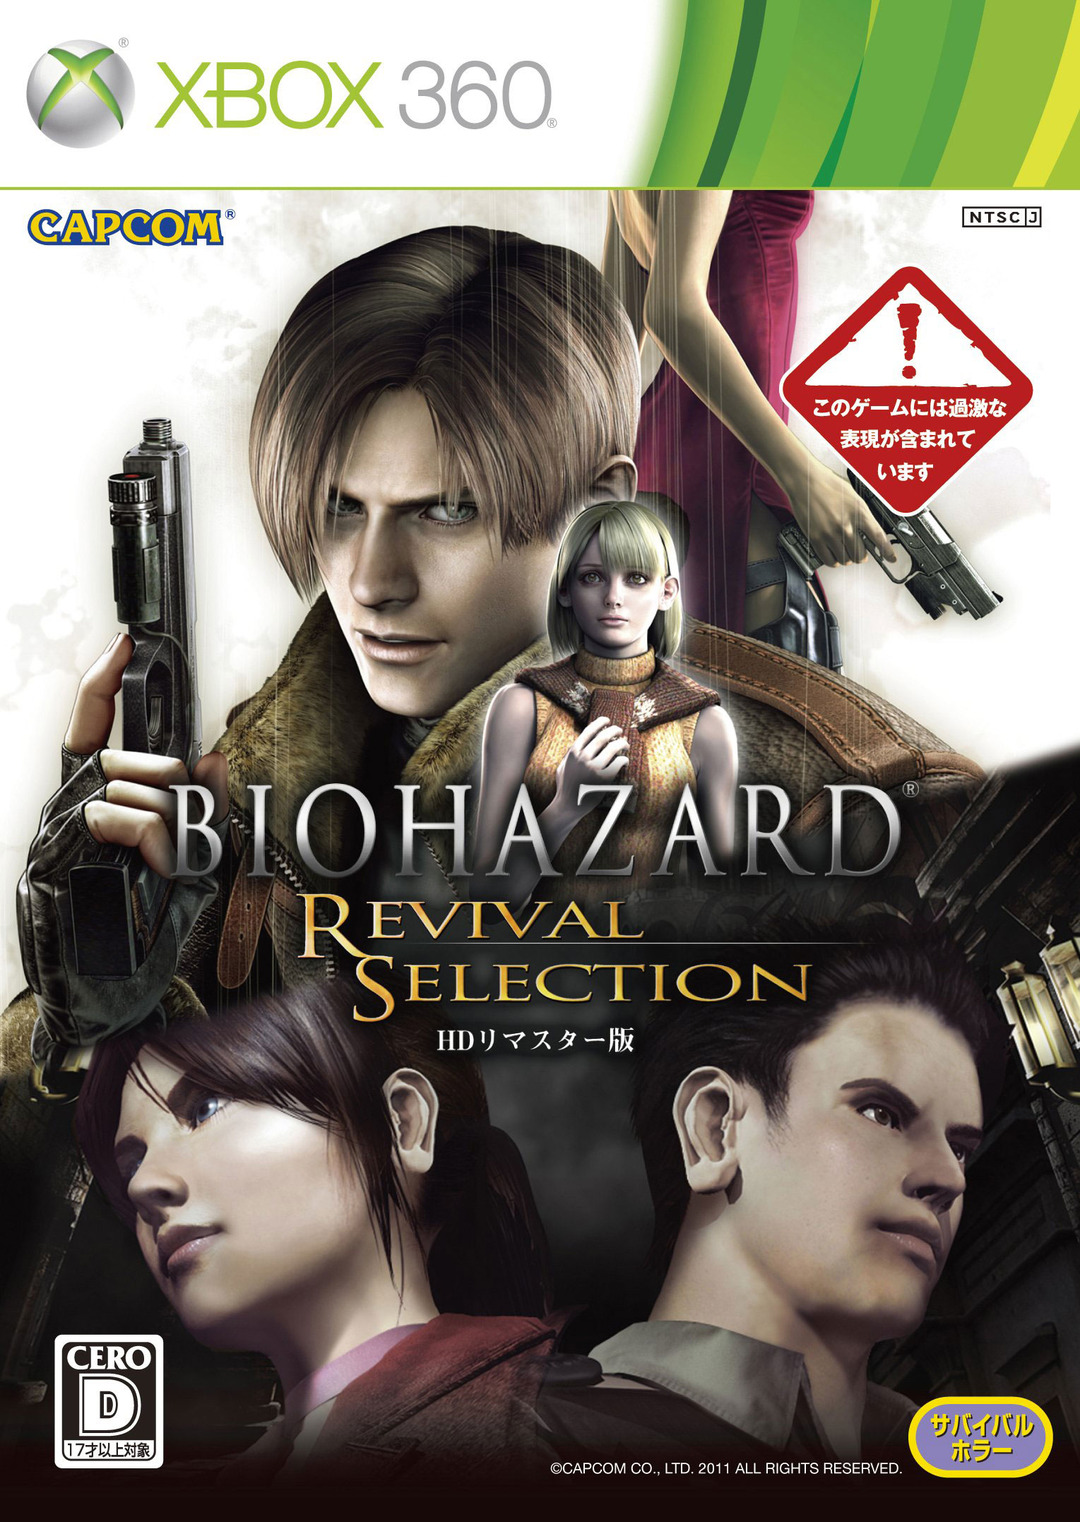 Игра xbox evil. Resident Evil Xbox 360. Resident Evil: Revival selection. Обитель зла на хбокс 360. Biohazard Revival selection ps3.